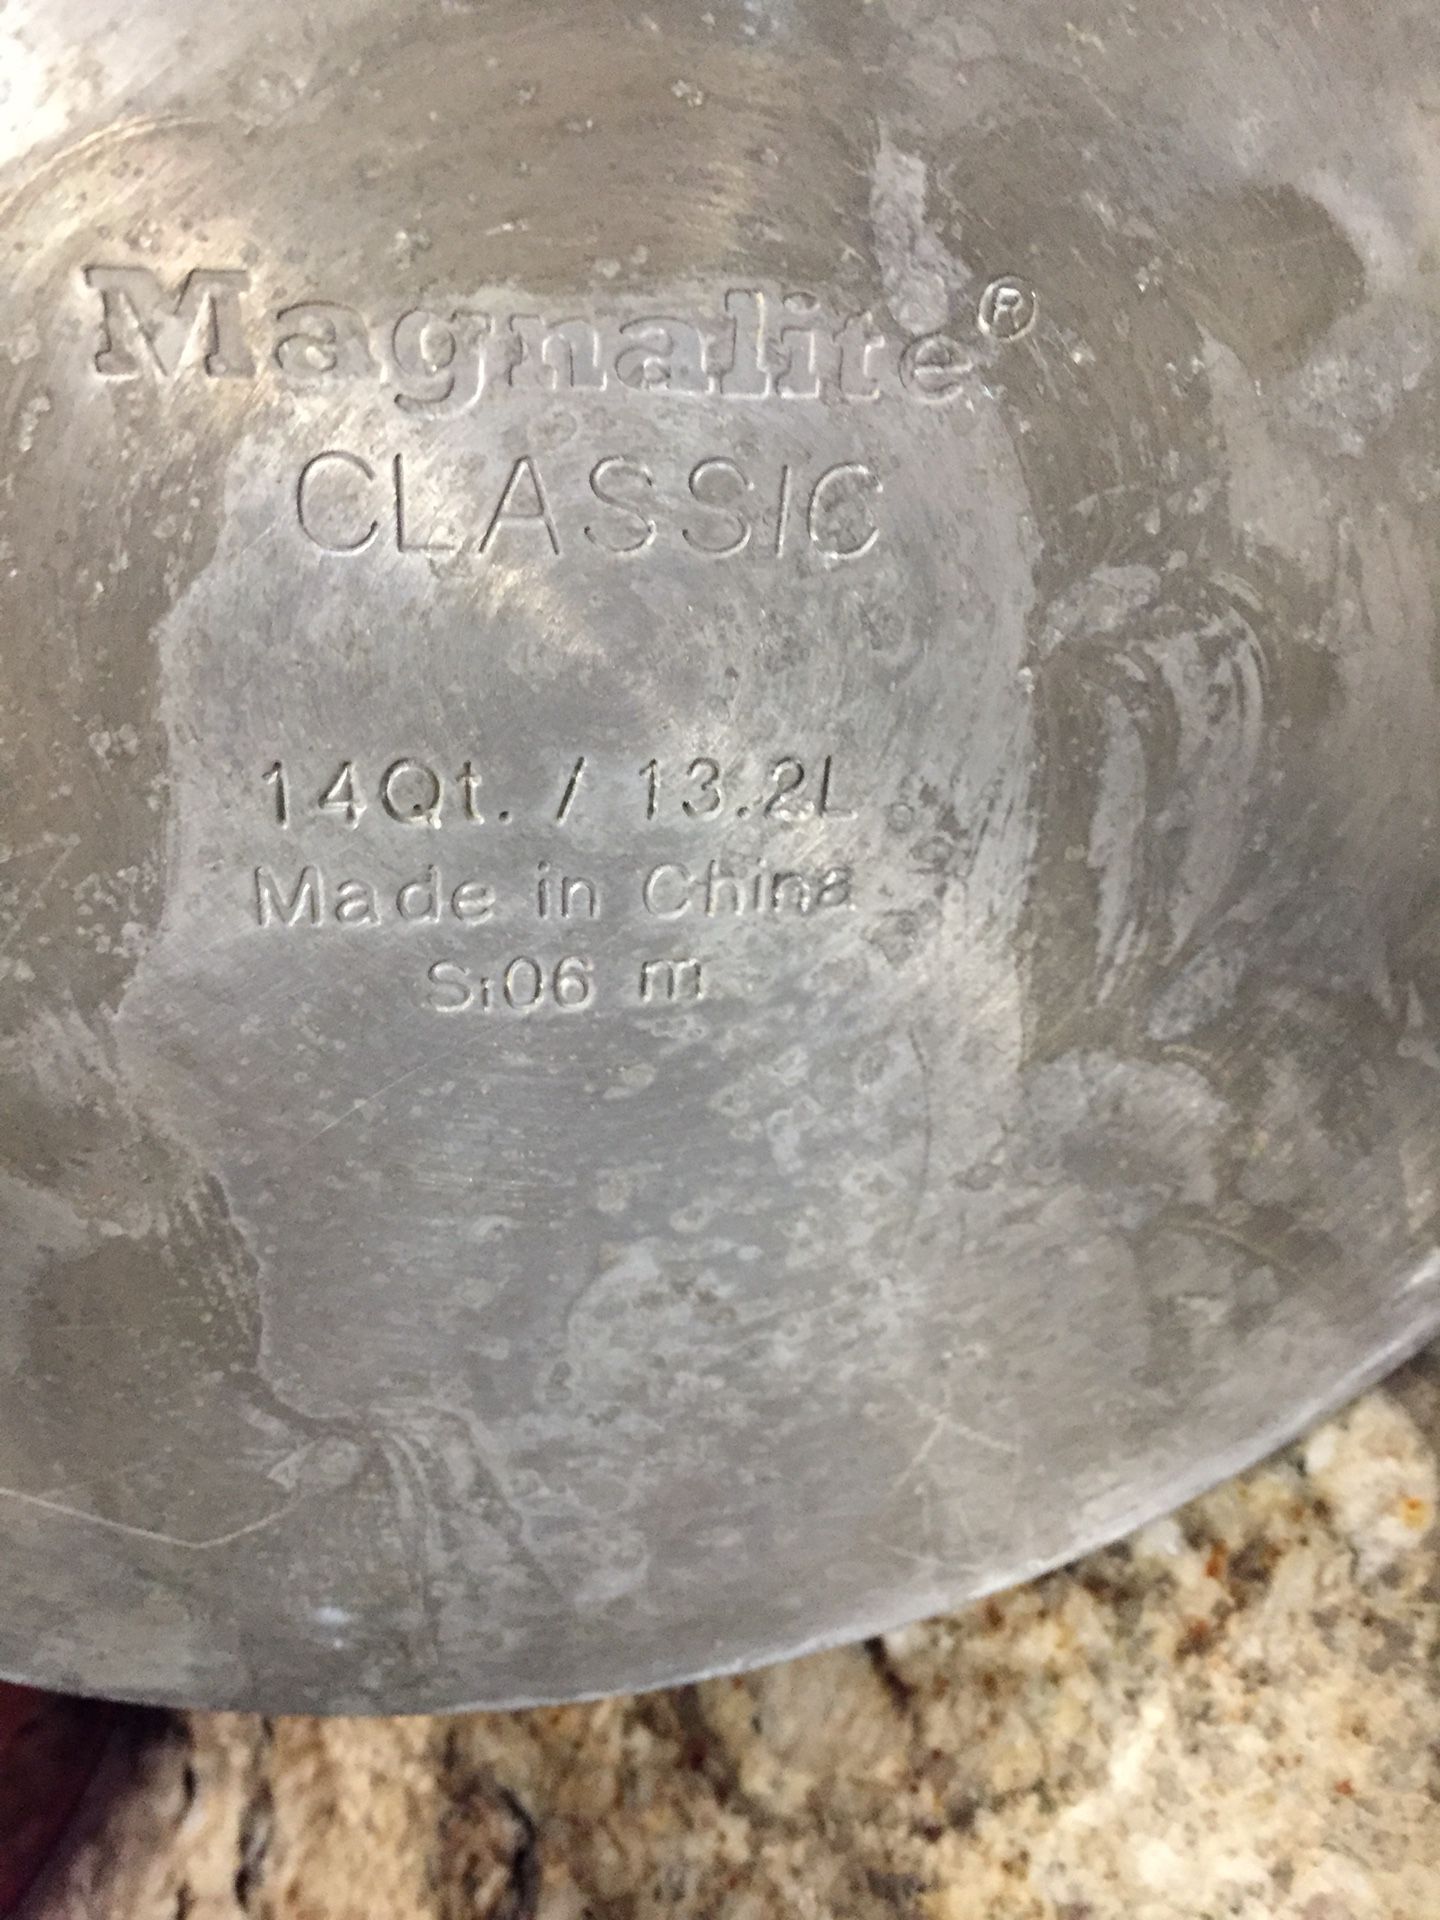 Magnalite 14 qt stock/gumbo pot for Sale in Slidell, LA - OfferUp